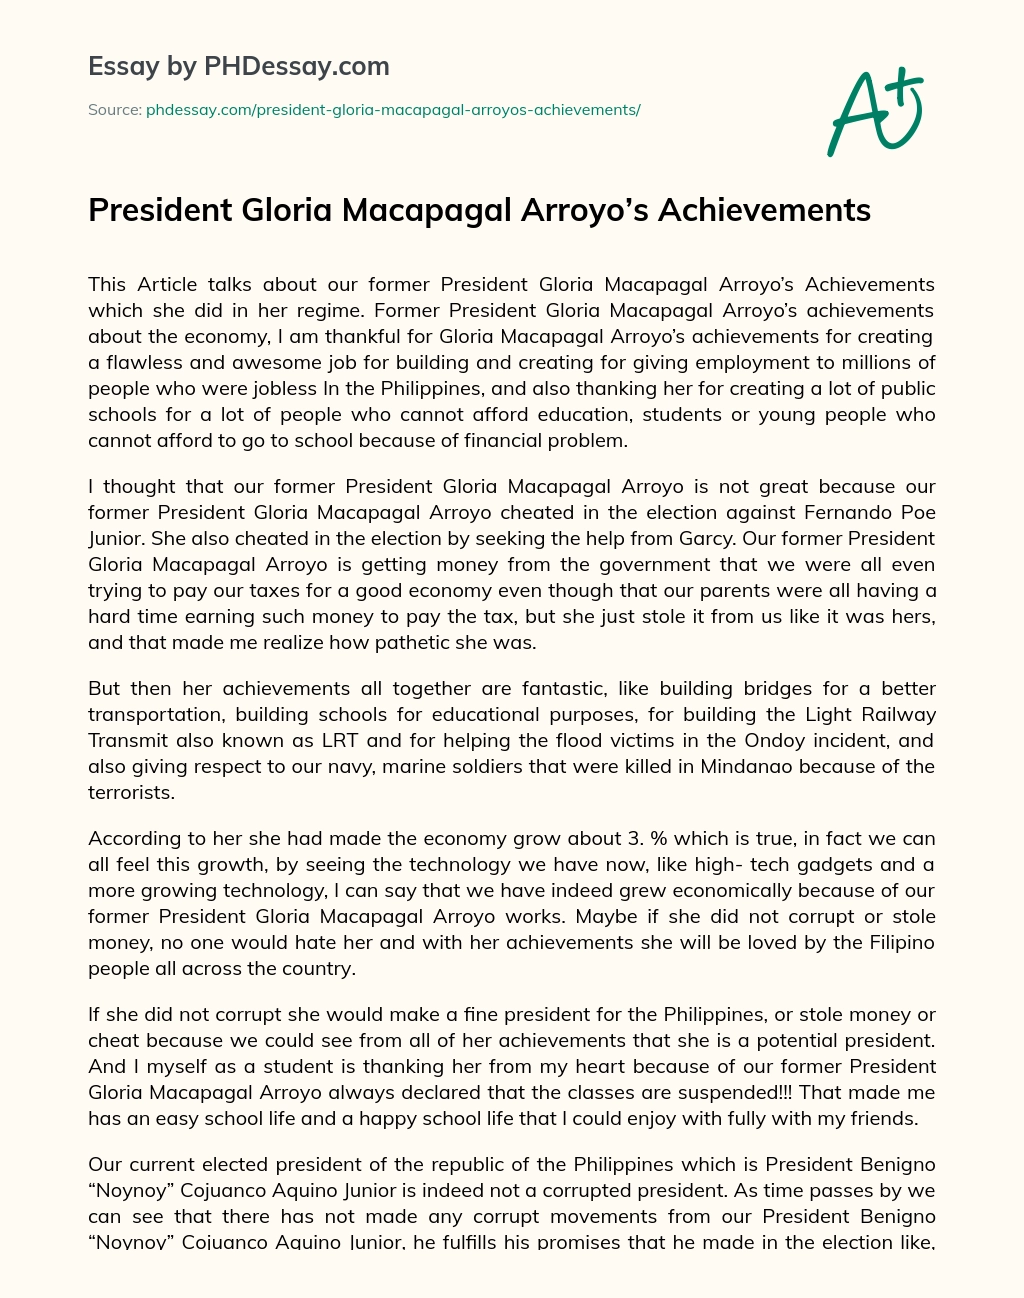 President Gloria Macapagal Arroyo’s Achievements essay